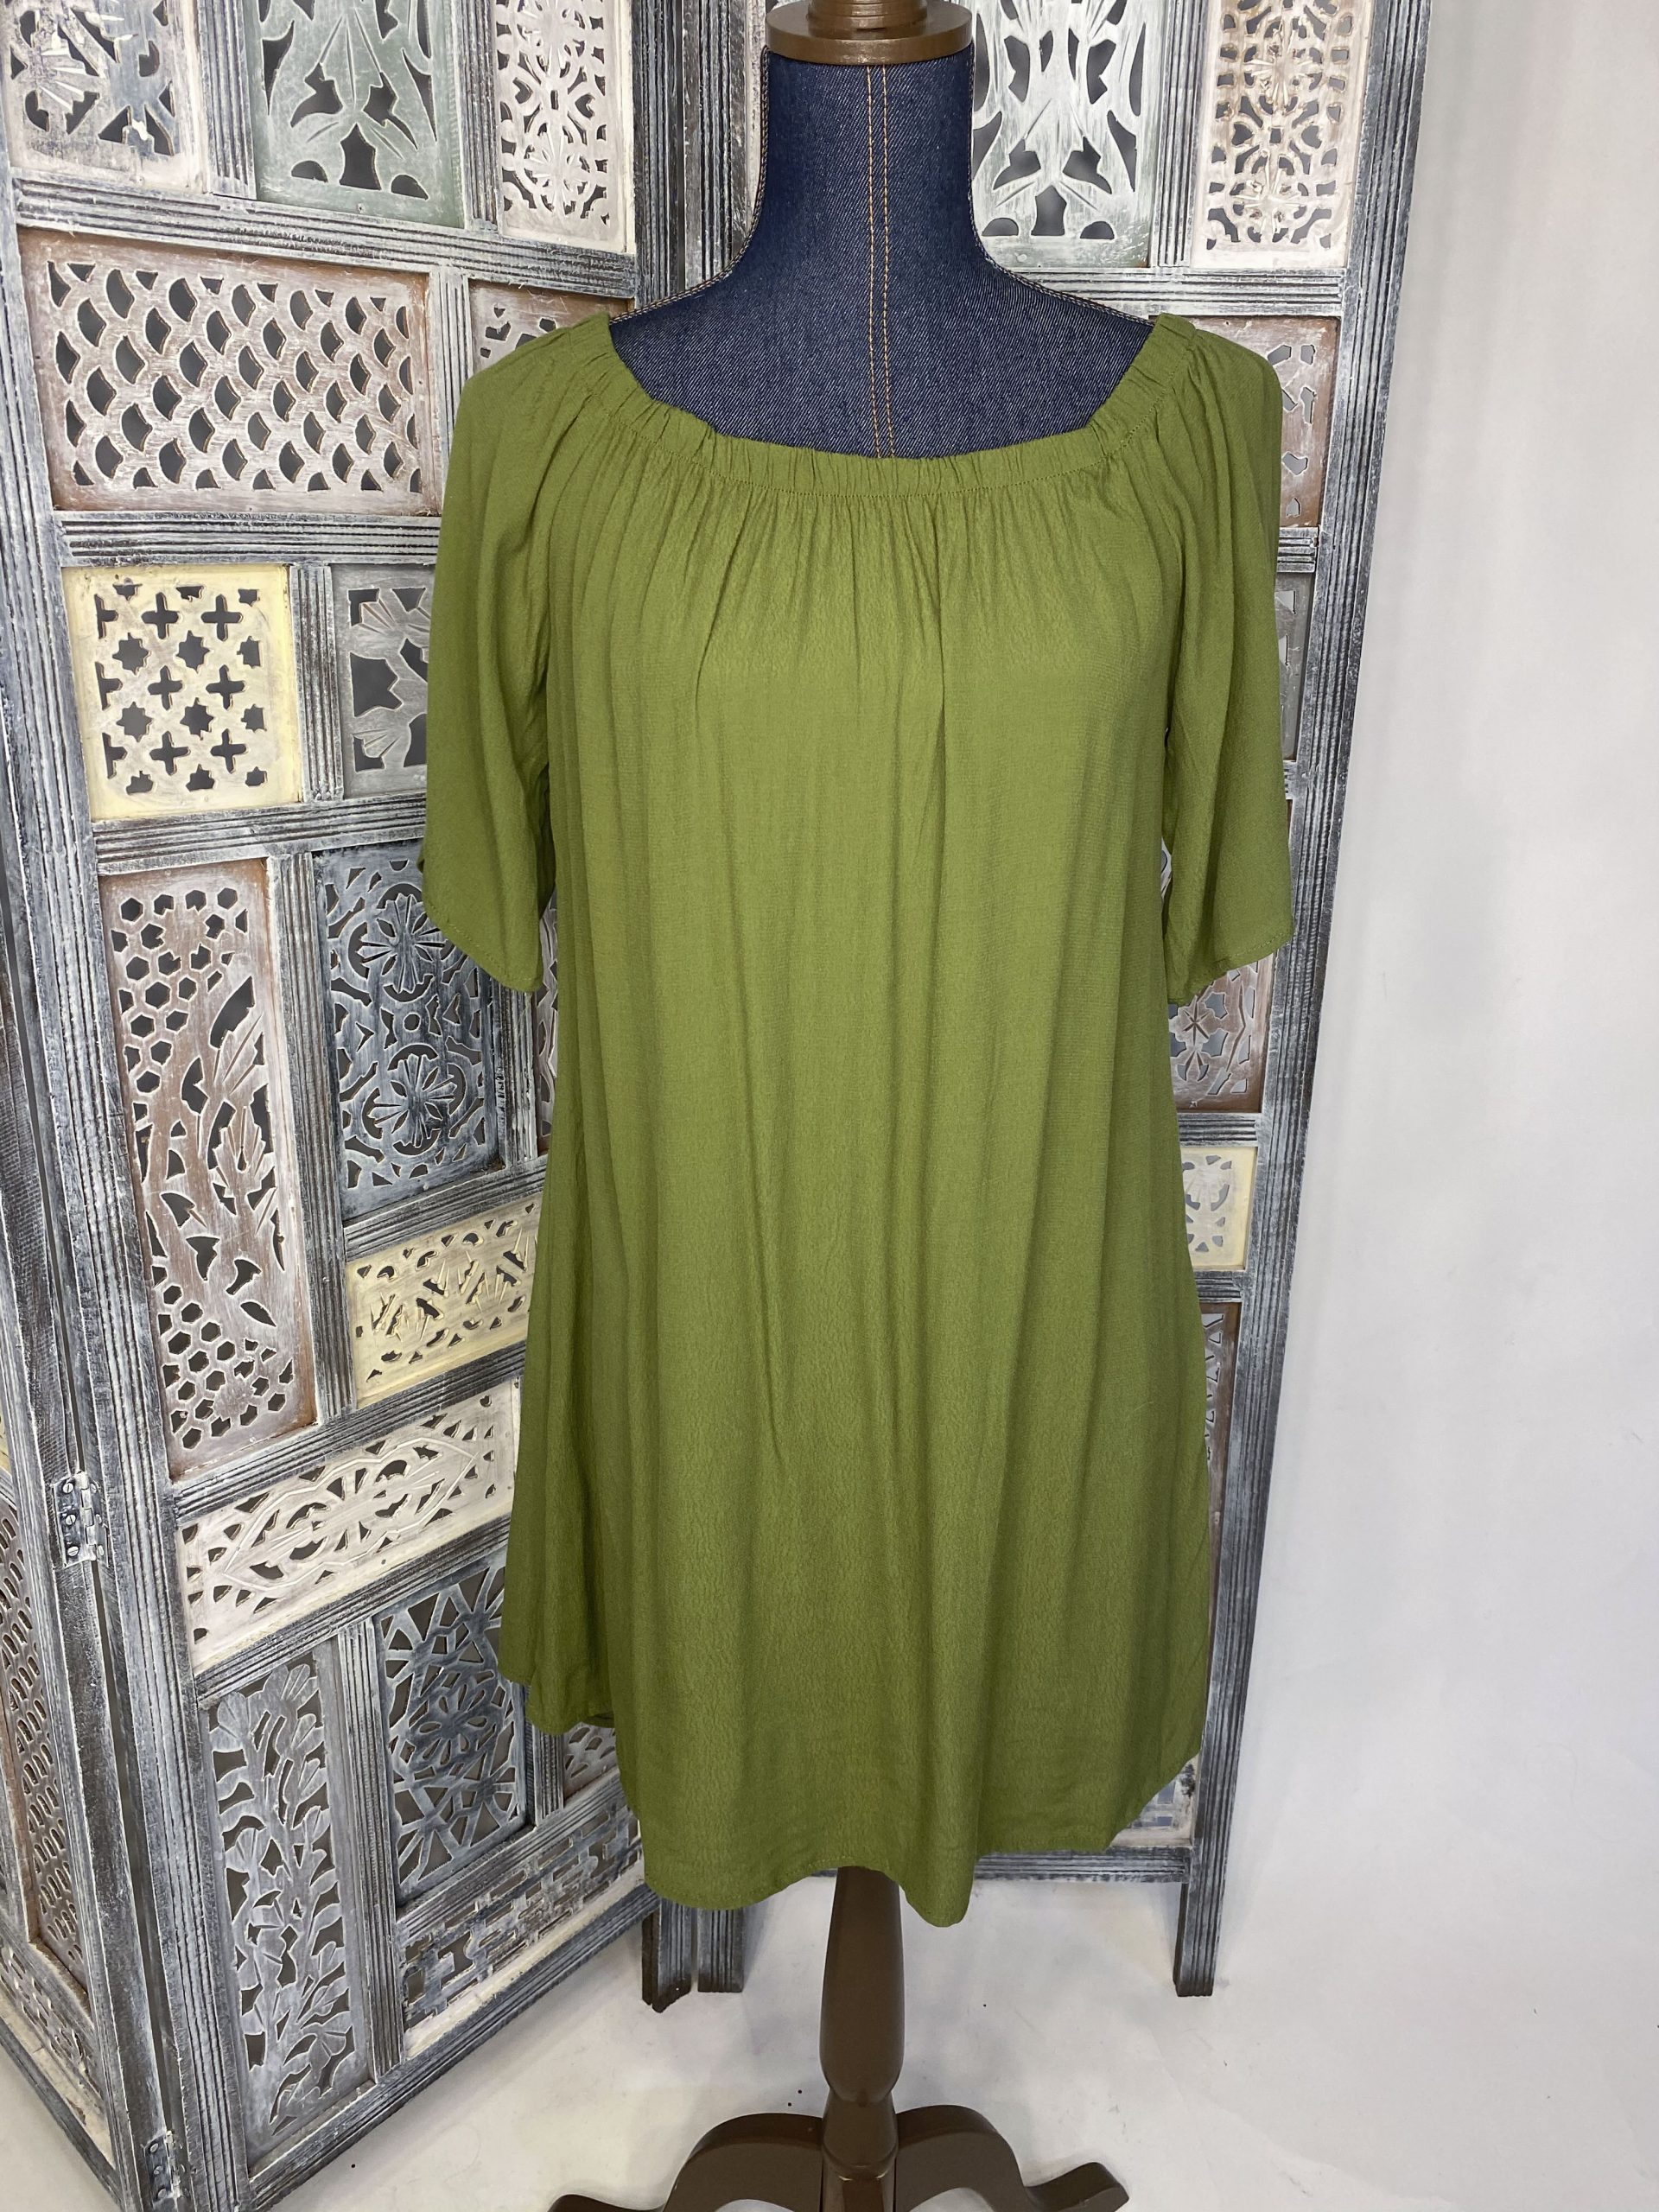 olive green dress size medium